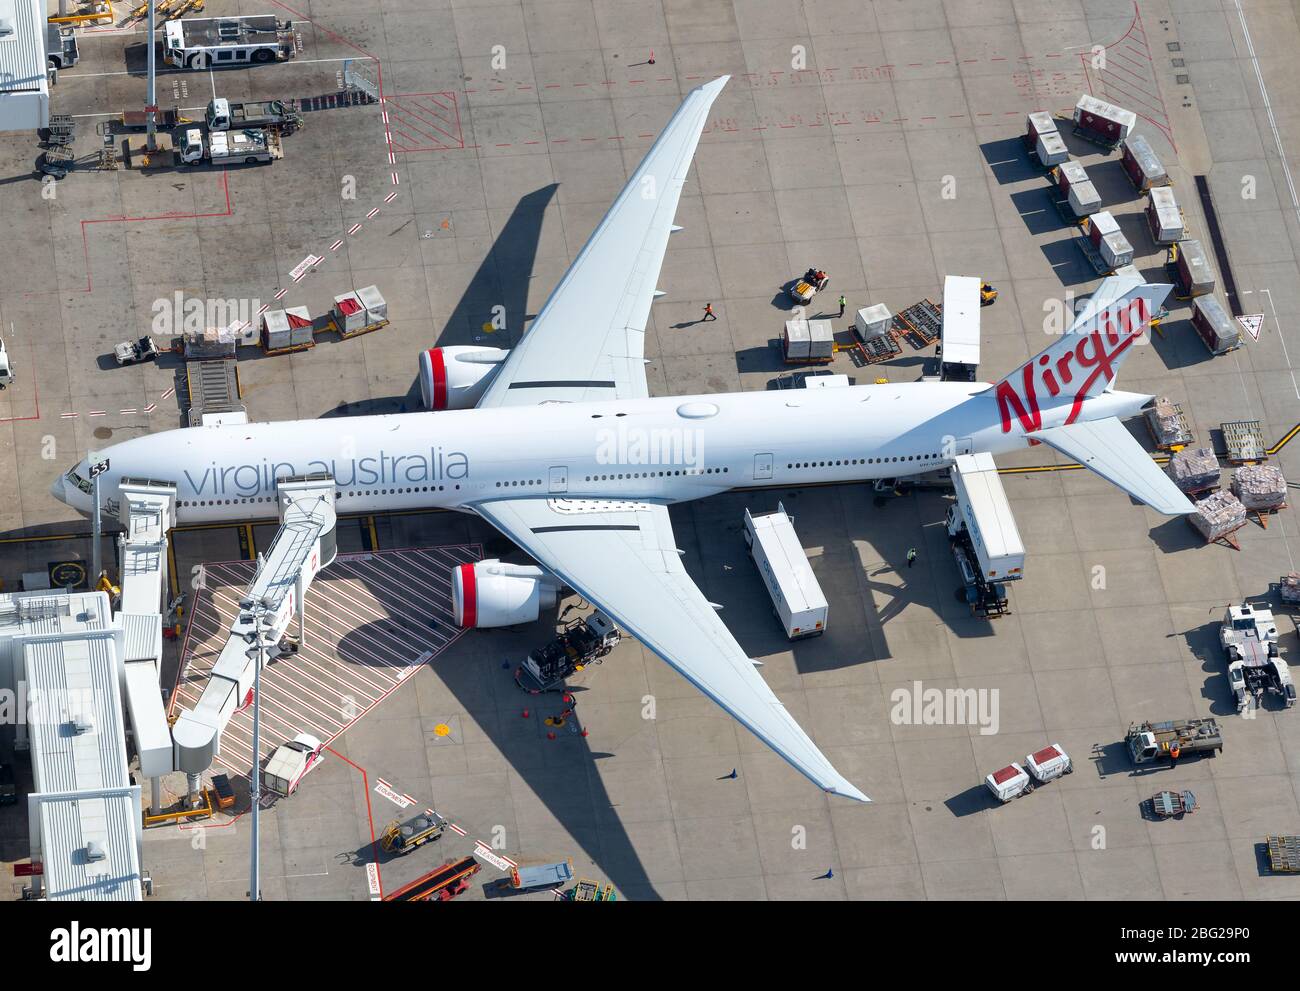 Virgin Australia Boeing 777 at Sydney International Airport. Aircraft registered as VH-VOZ. Airline in debt entering voluntary administration. Stock Photo